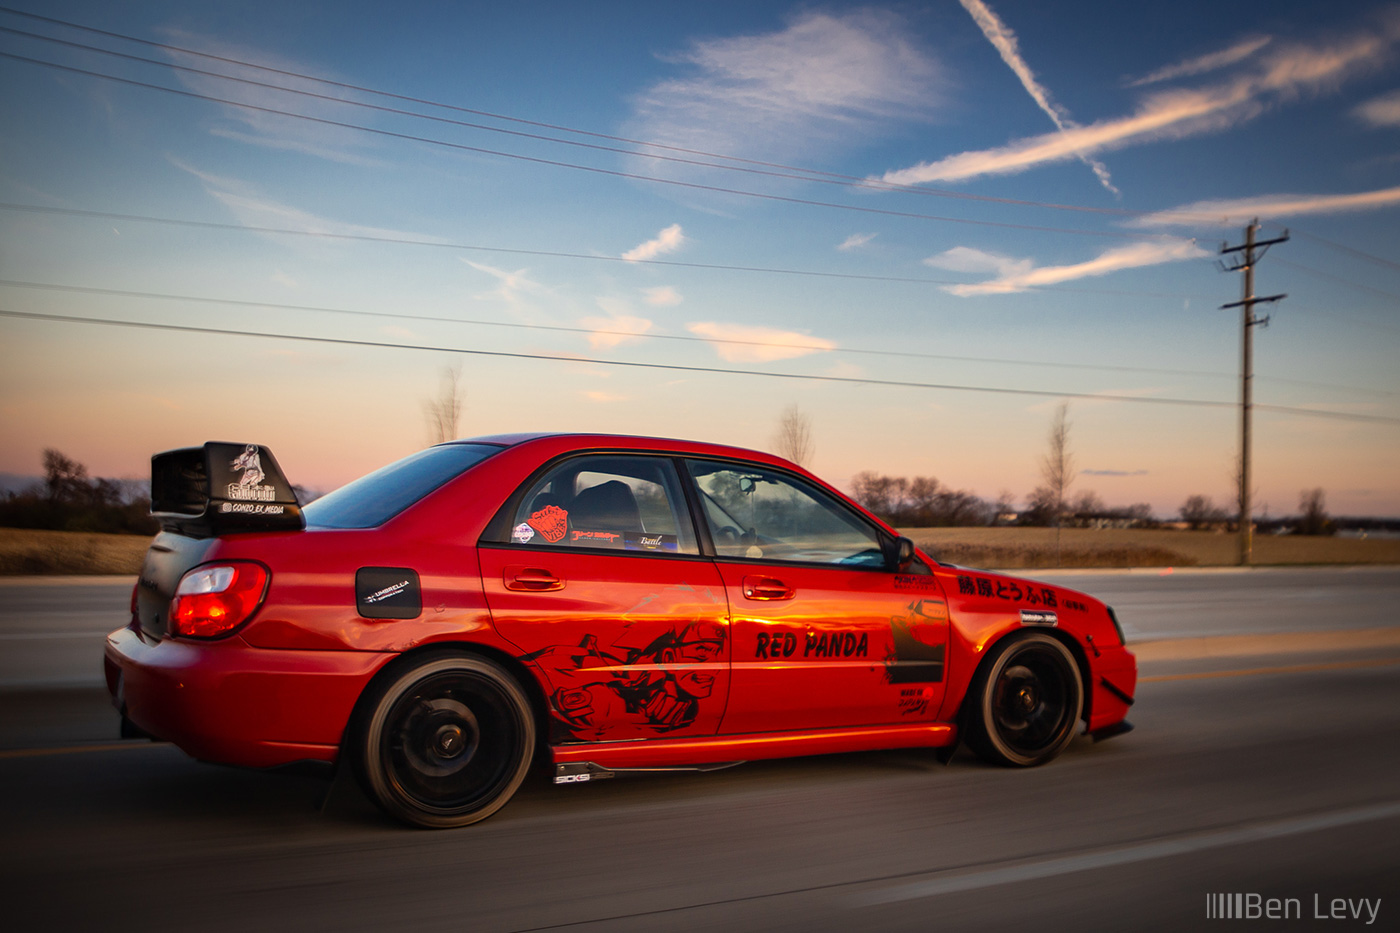 Rolling Shot of Red Subaru Impreza in Illinois